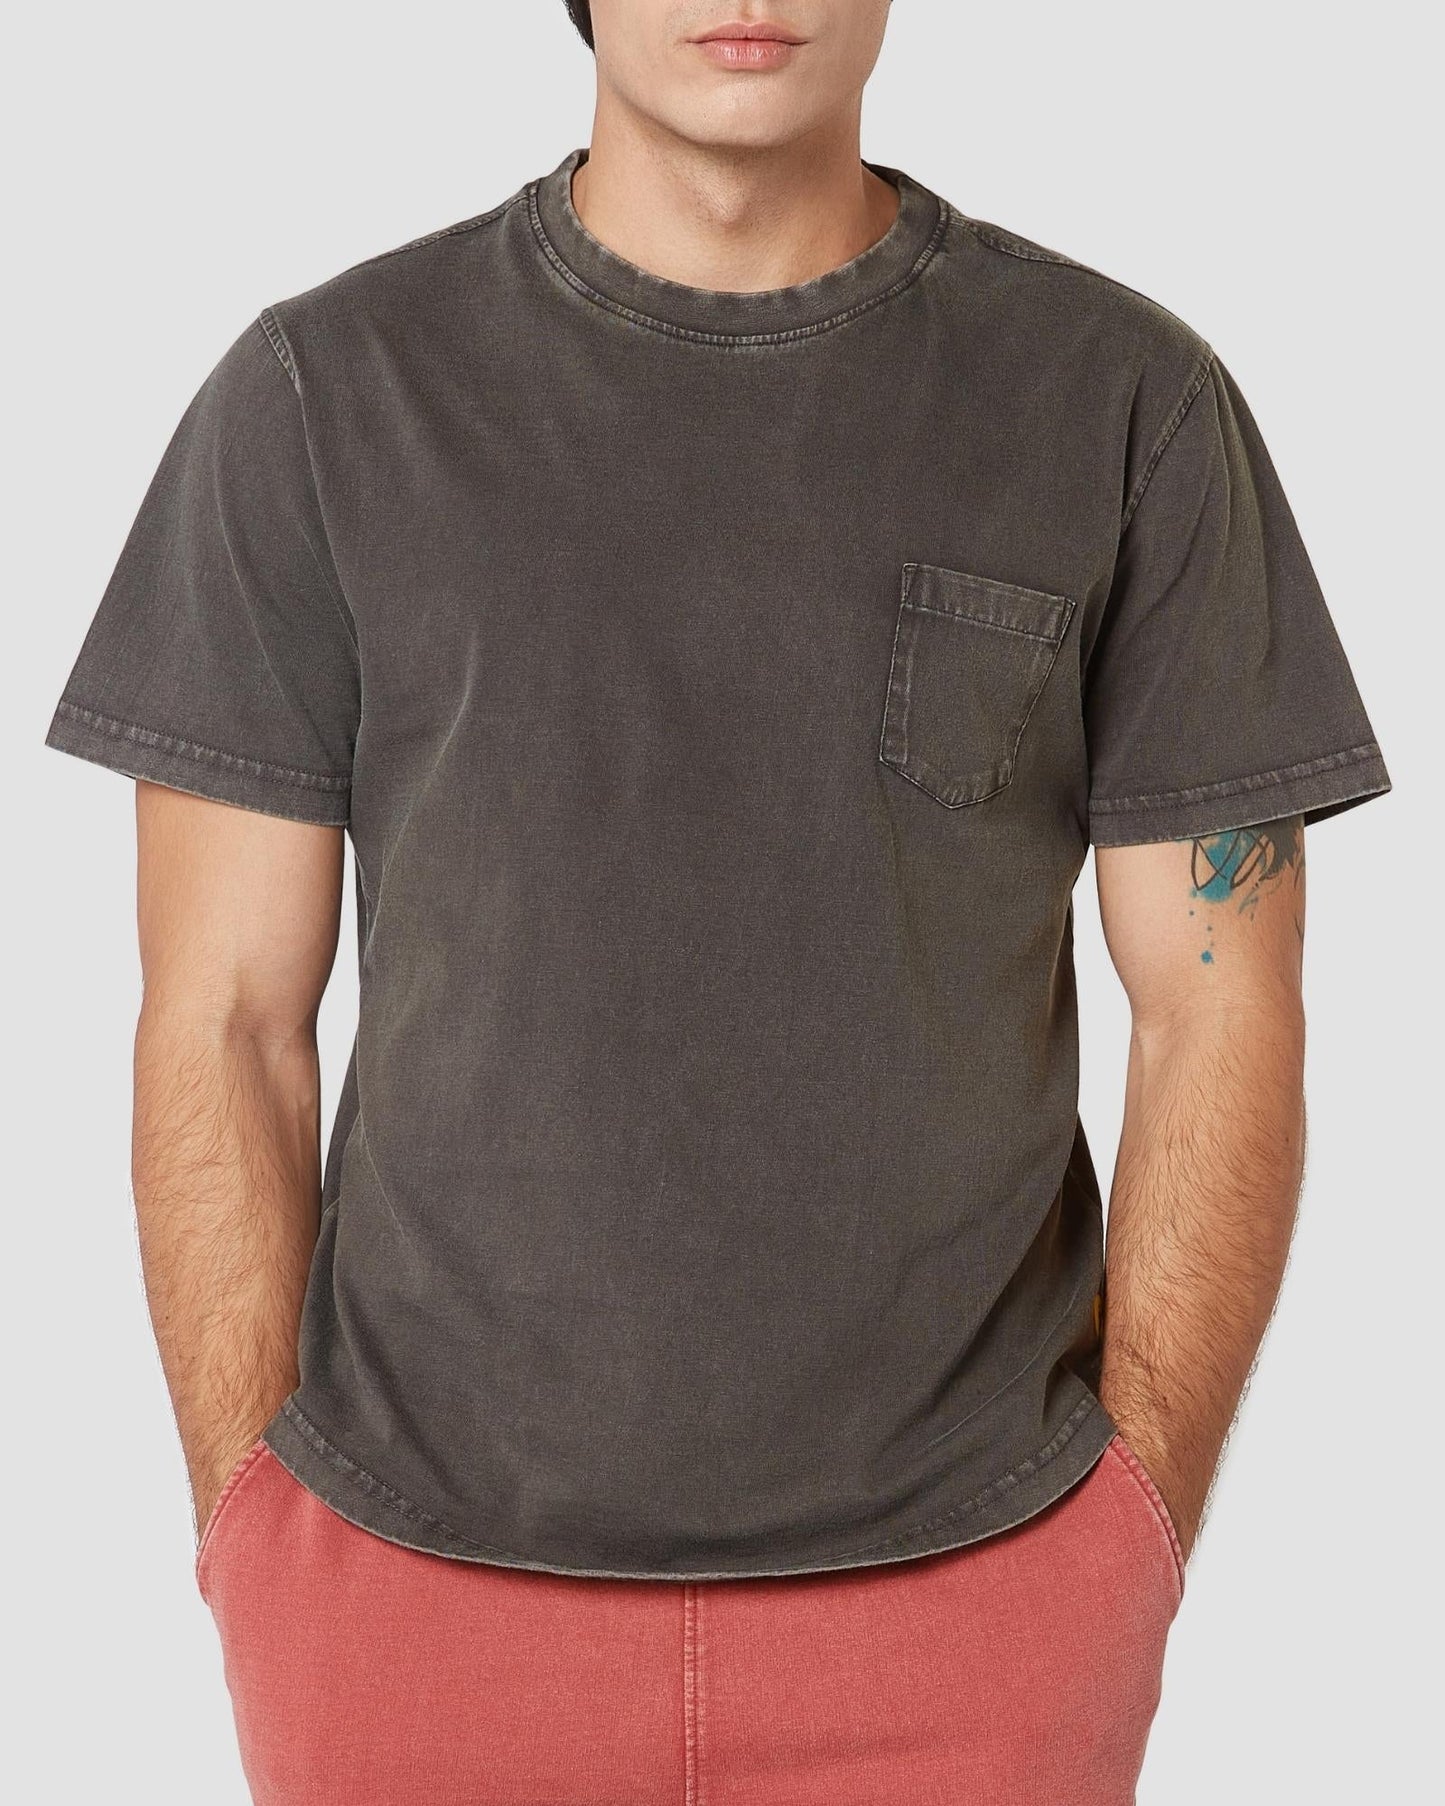 cityof_ - Distressed Pocket T-Shirt